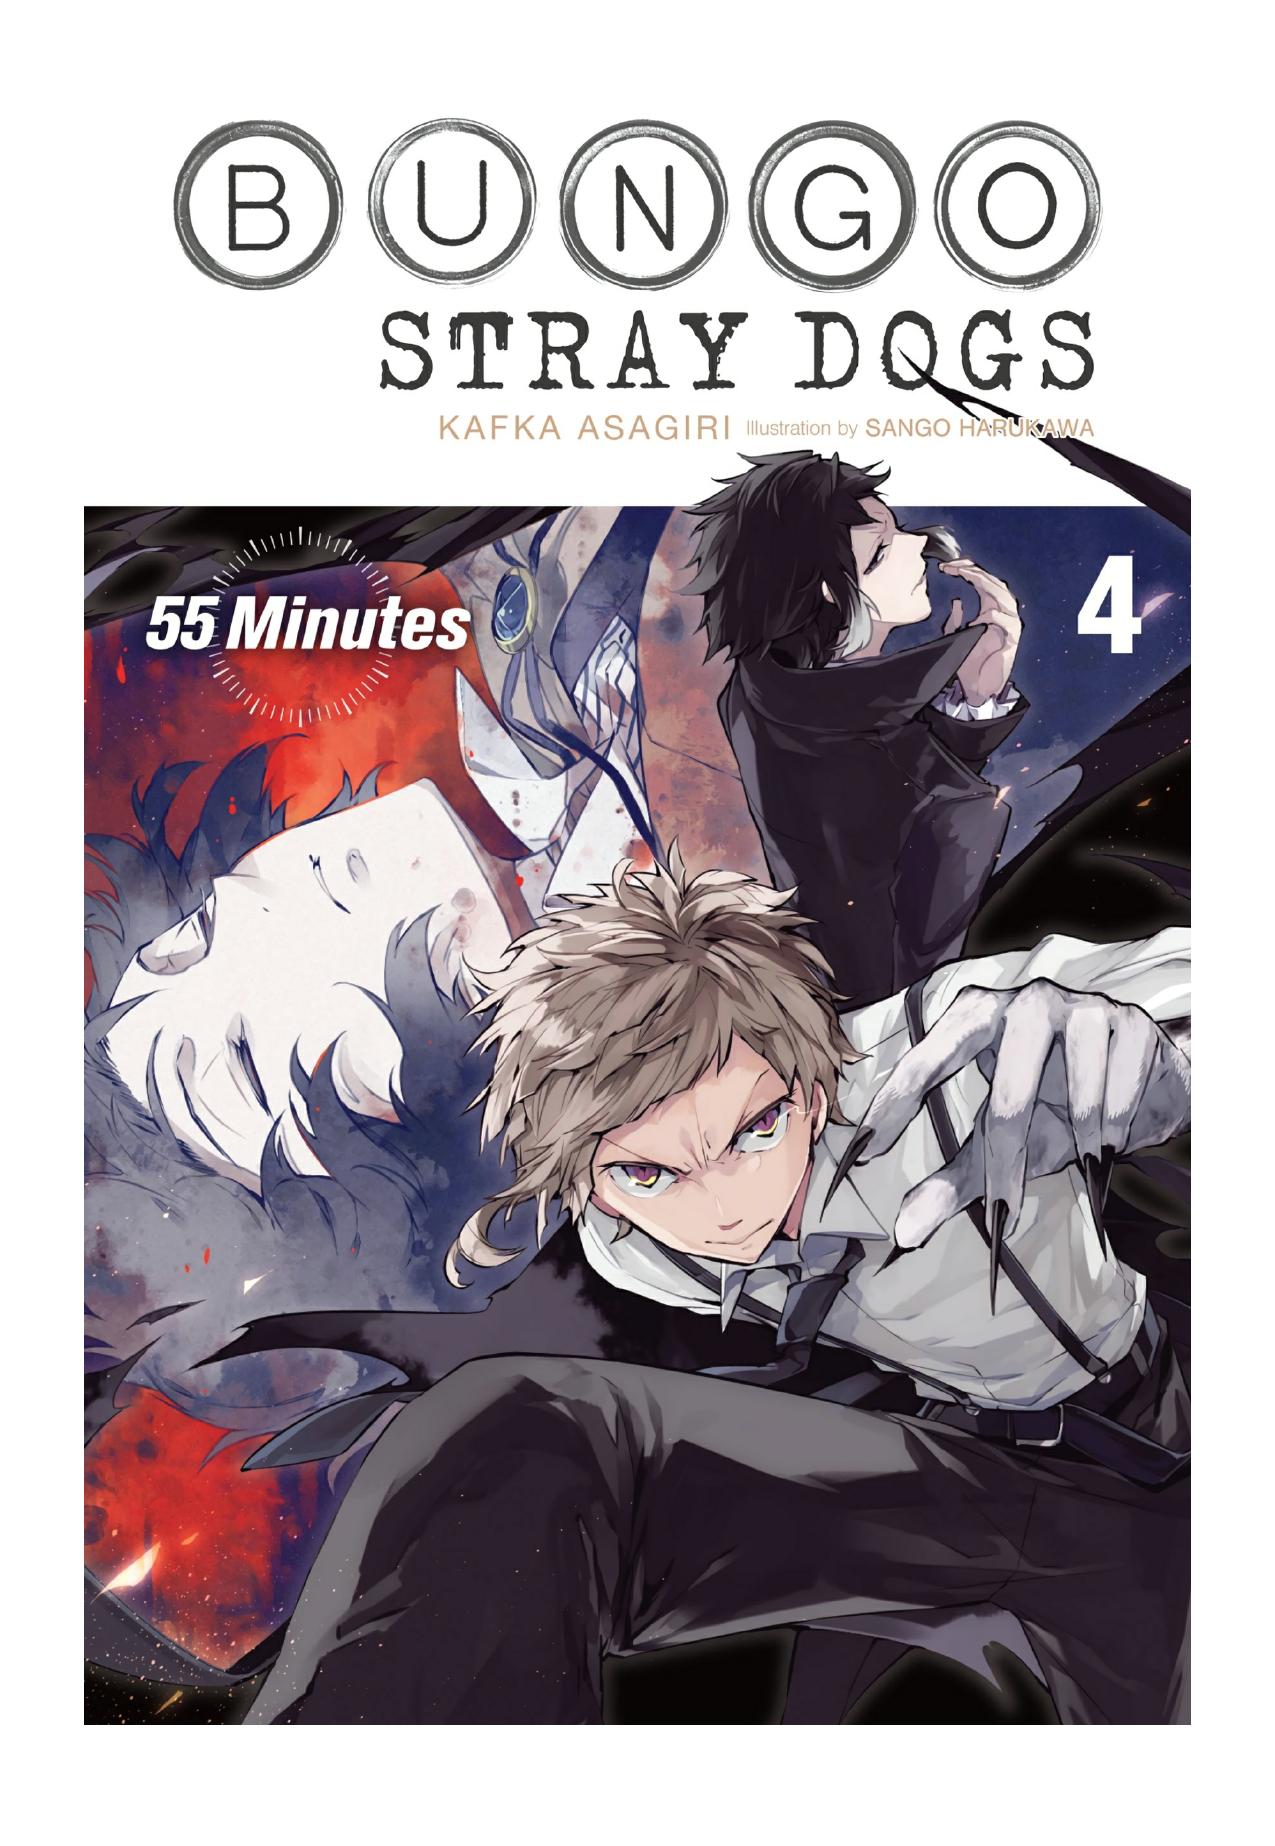 Bungo Stray Dogs, Vol. 4: 55 Minutes by Kafka Asagiri & Sango Harukawa